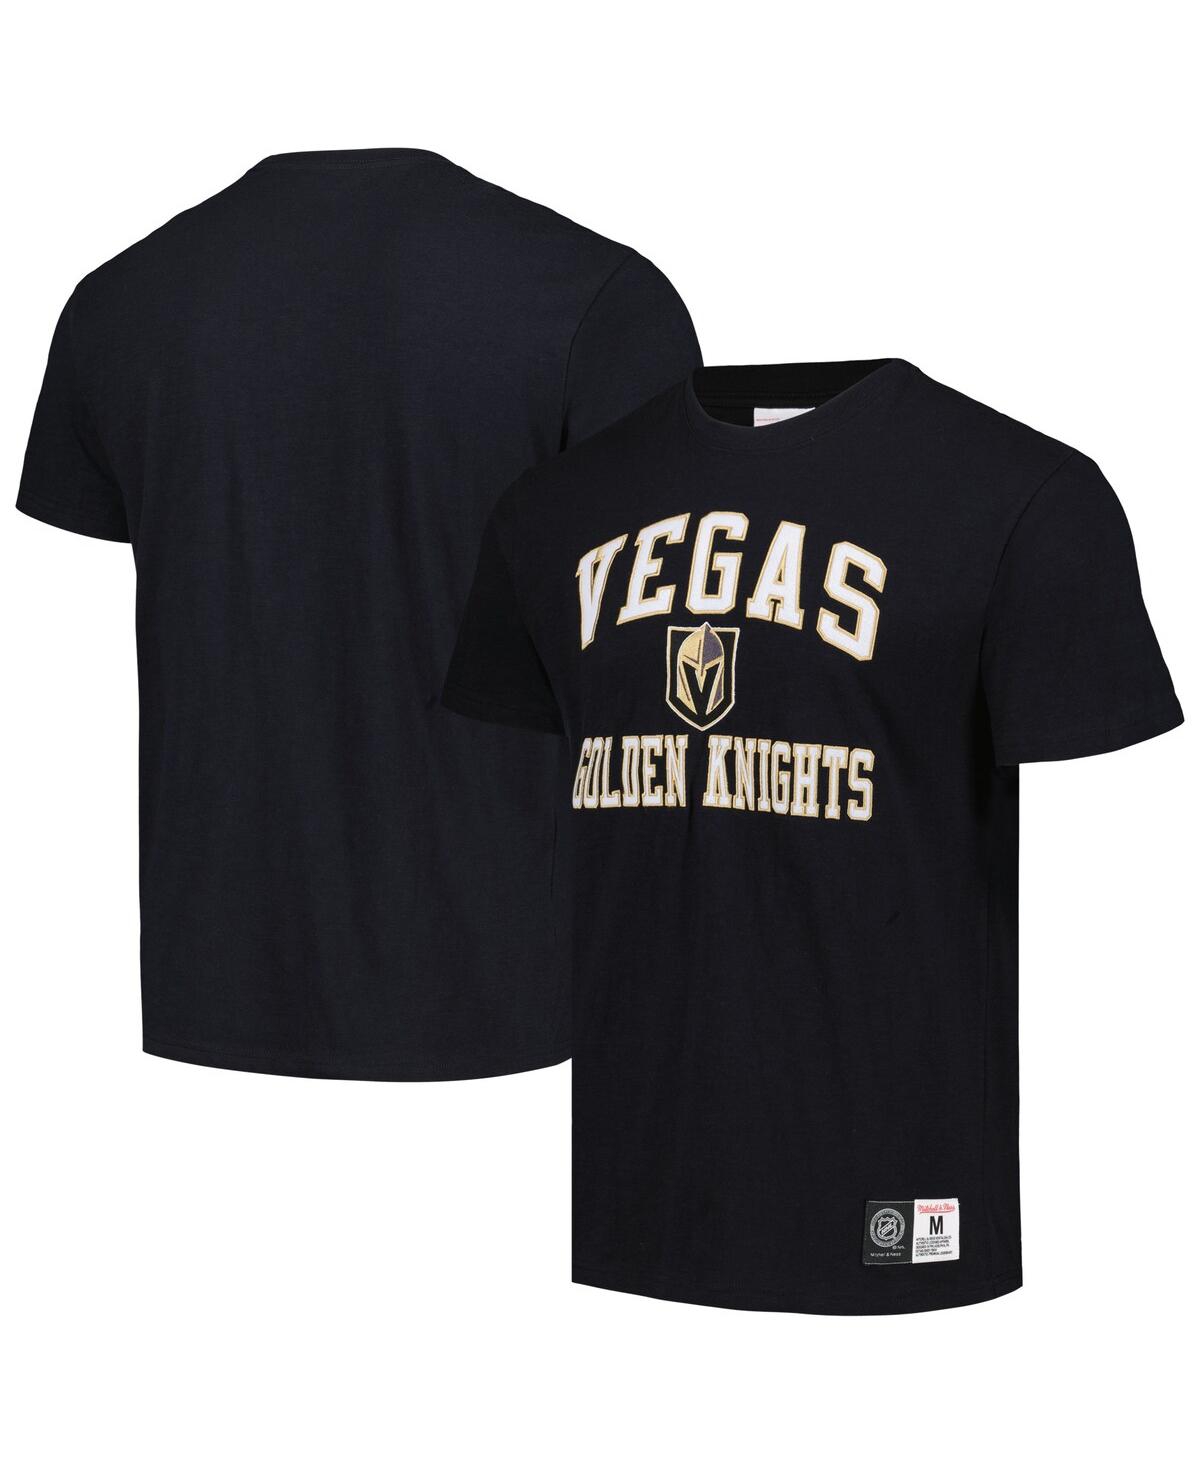 Men's Mitchell & Ness Black Vegas Golden Knights Legendary Slub T-shirt - Black